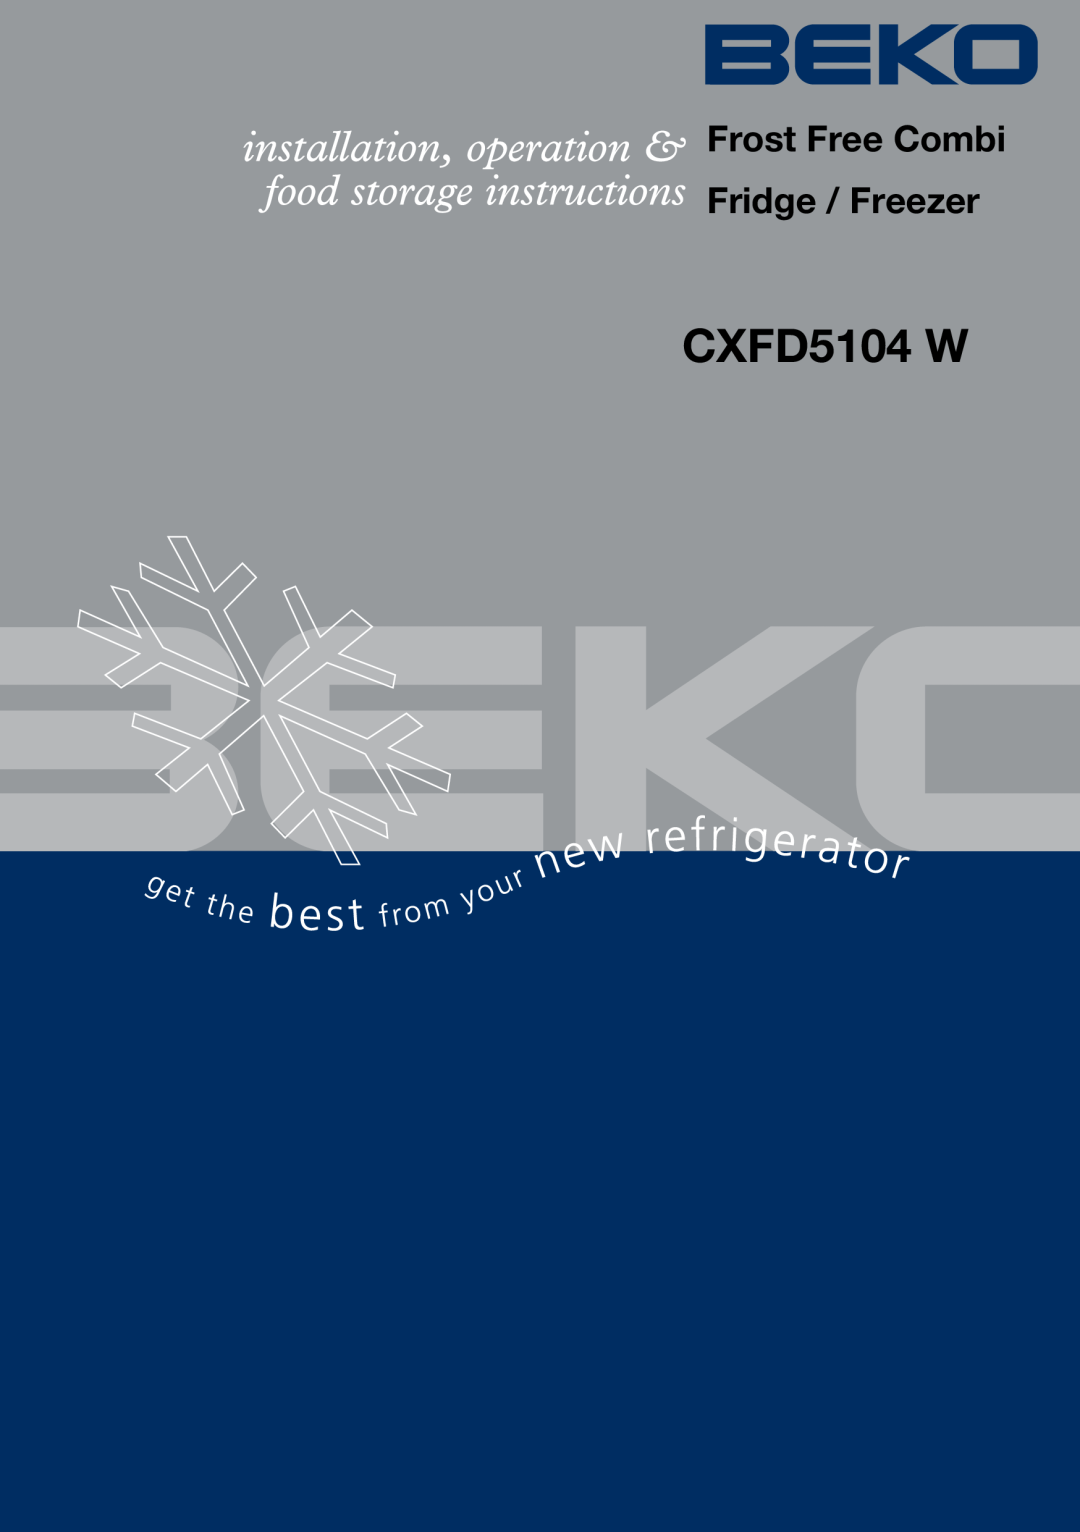 Beko CXFD5104 W manual Frost Free Combi Fridge / Freezer 